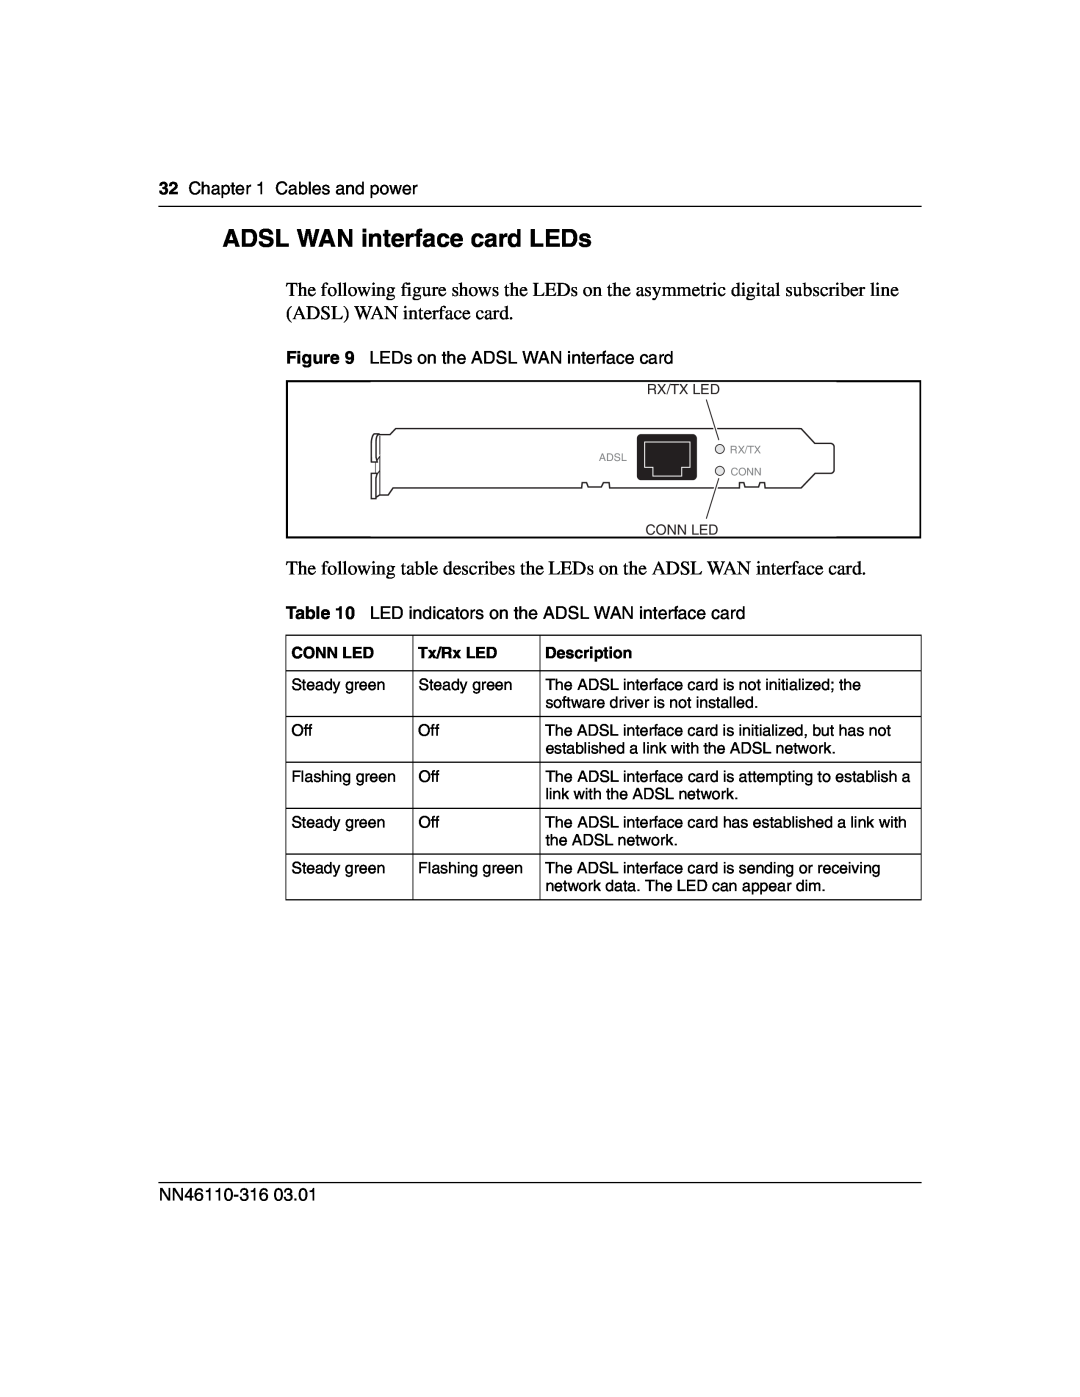 Nortel Networks 1750 ADSL WAN interface card LEDs, Cables and power, LEDs on the ADSL WAN interface card, NN46110-316 